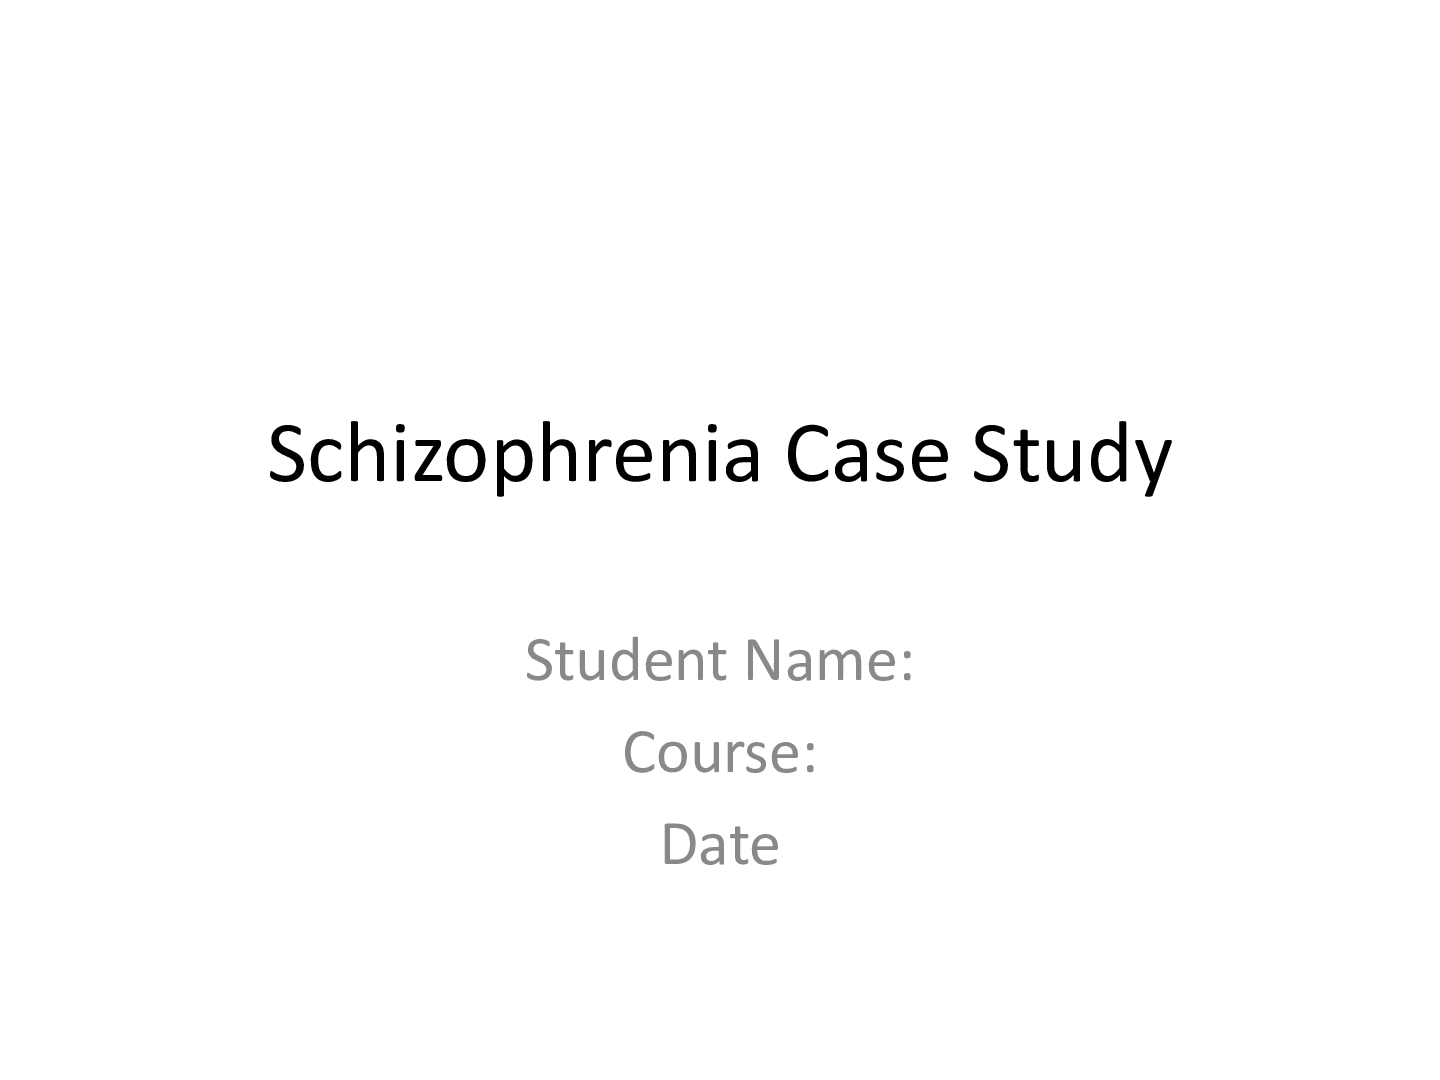 pn schizophrenia case study